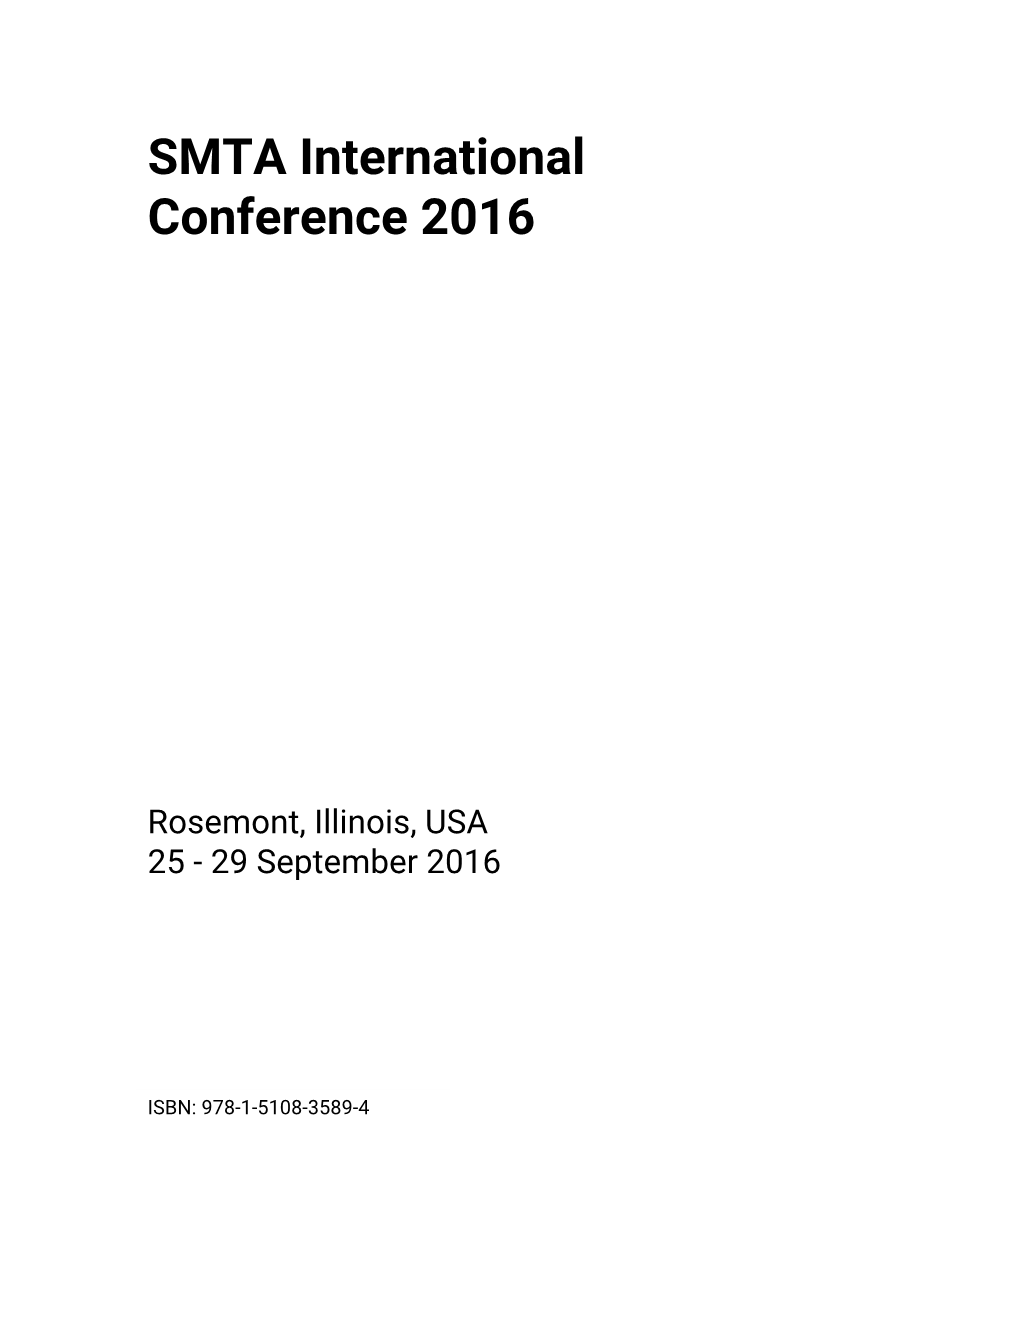 SMTA International Conference 2016